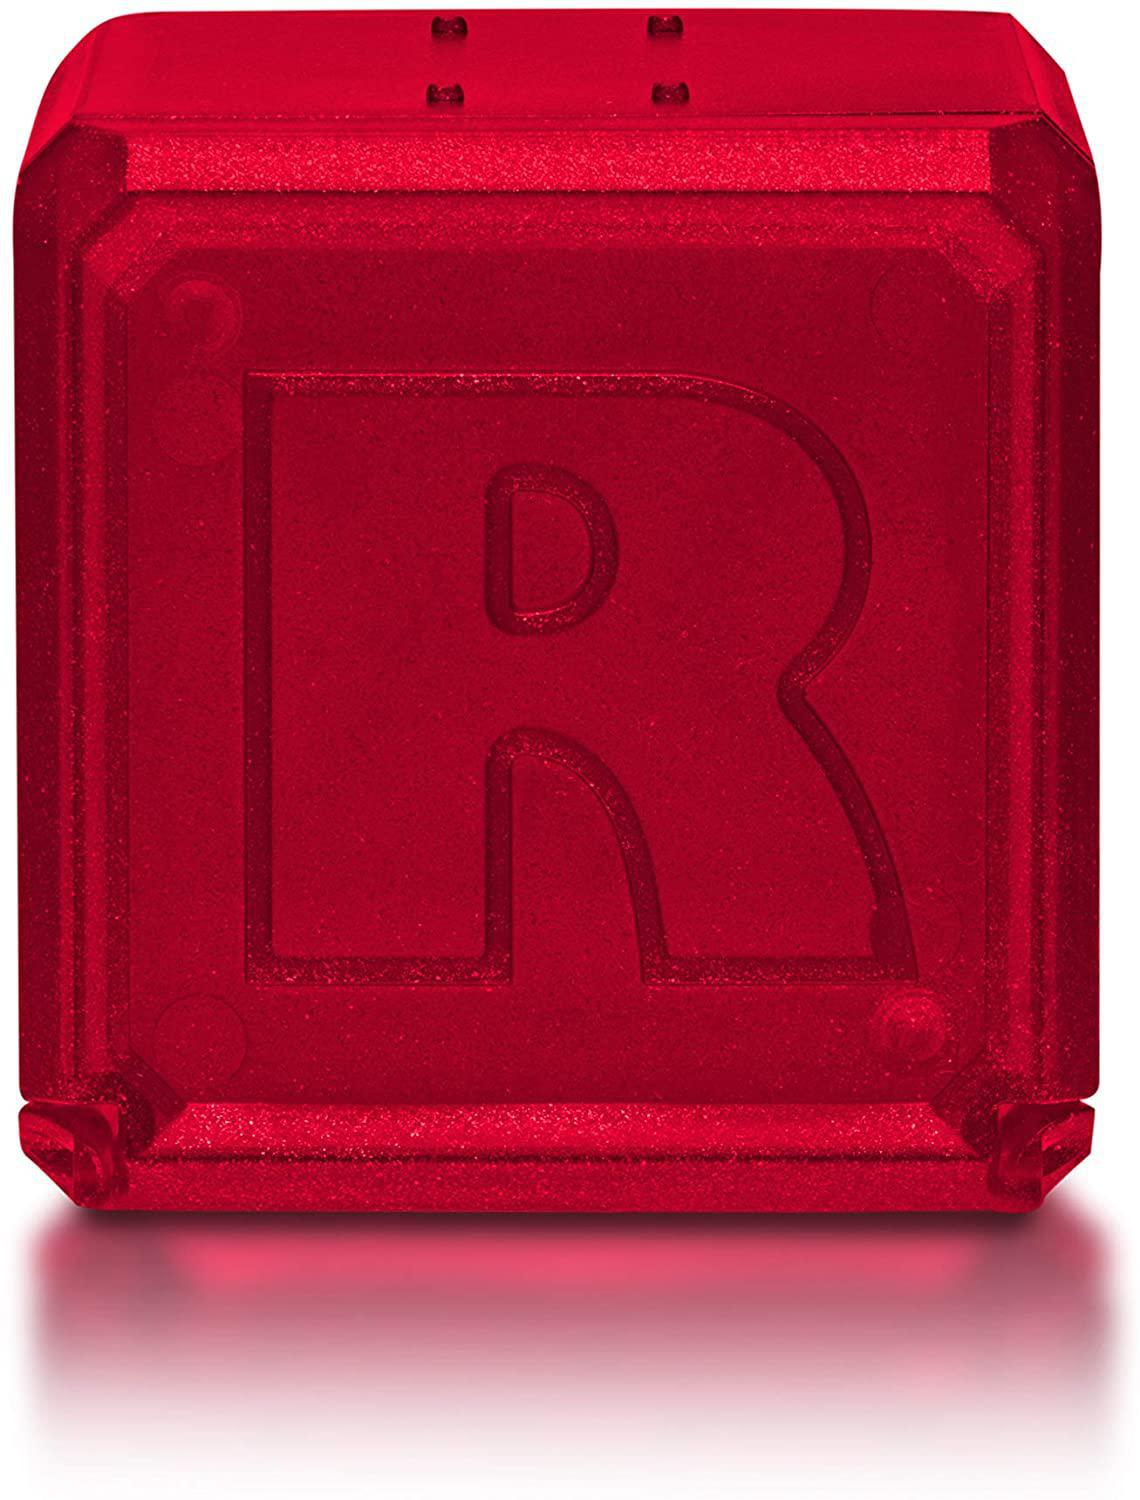 Roblox Series 5 Mystery Pack Gold Cube, 1 RANDOM Figure Virtual Item Code  Jazwares - ToyWiz